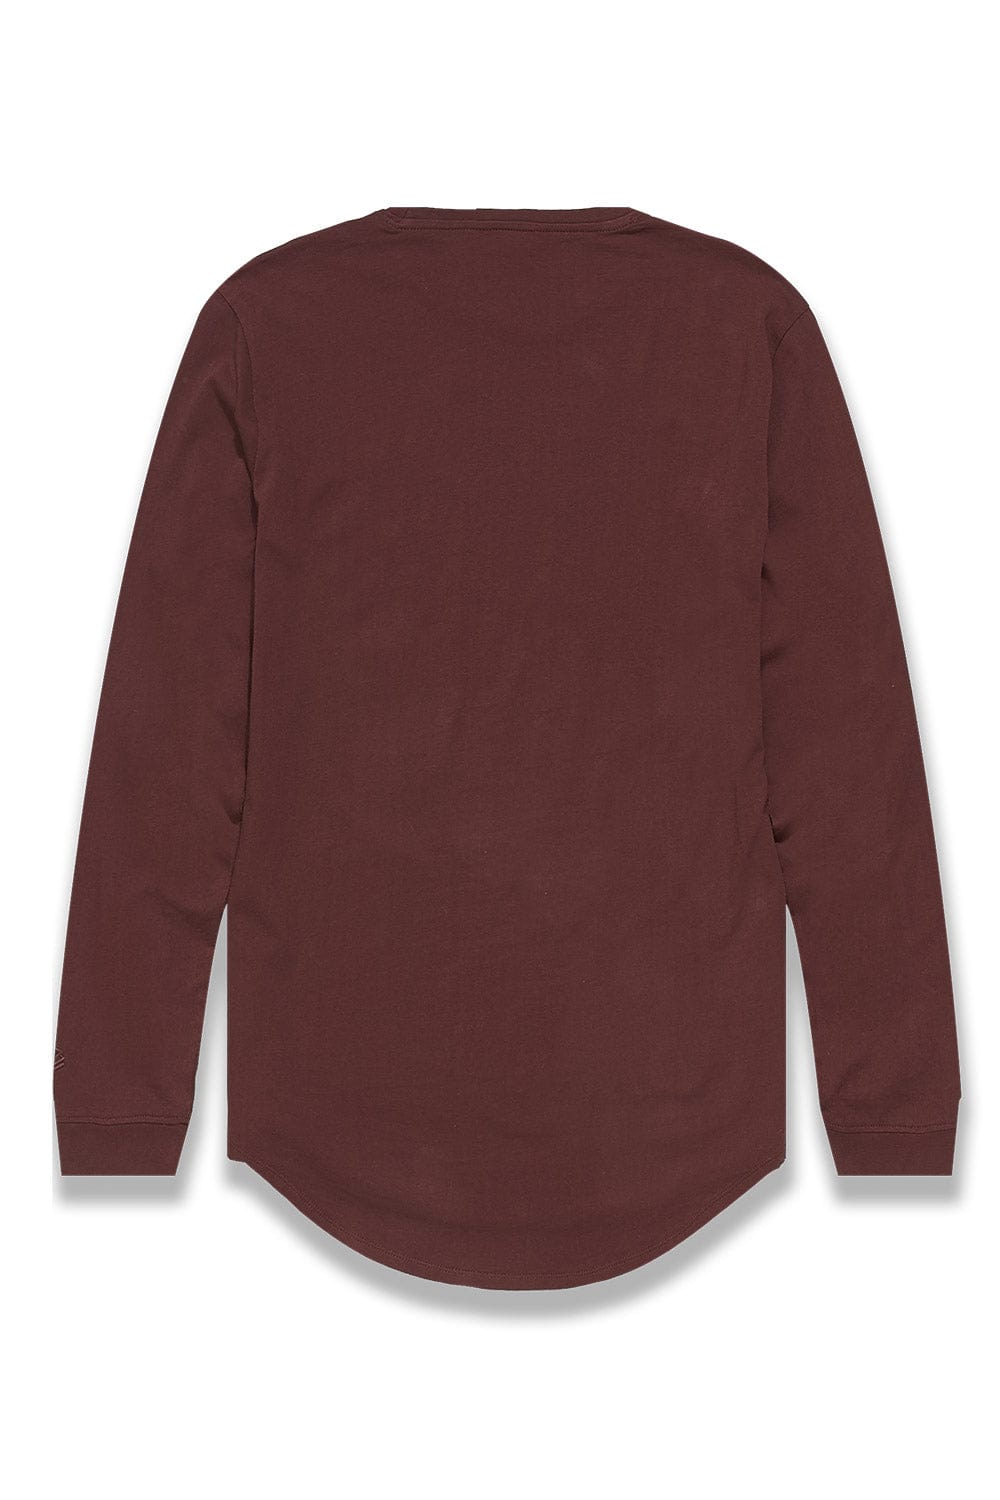 Jordan Craig Stockpile L/S T-Shirt (Brown Brick)